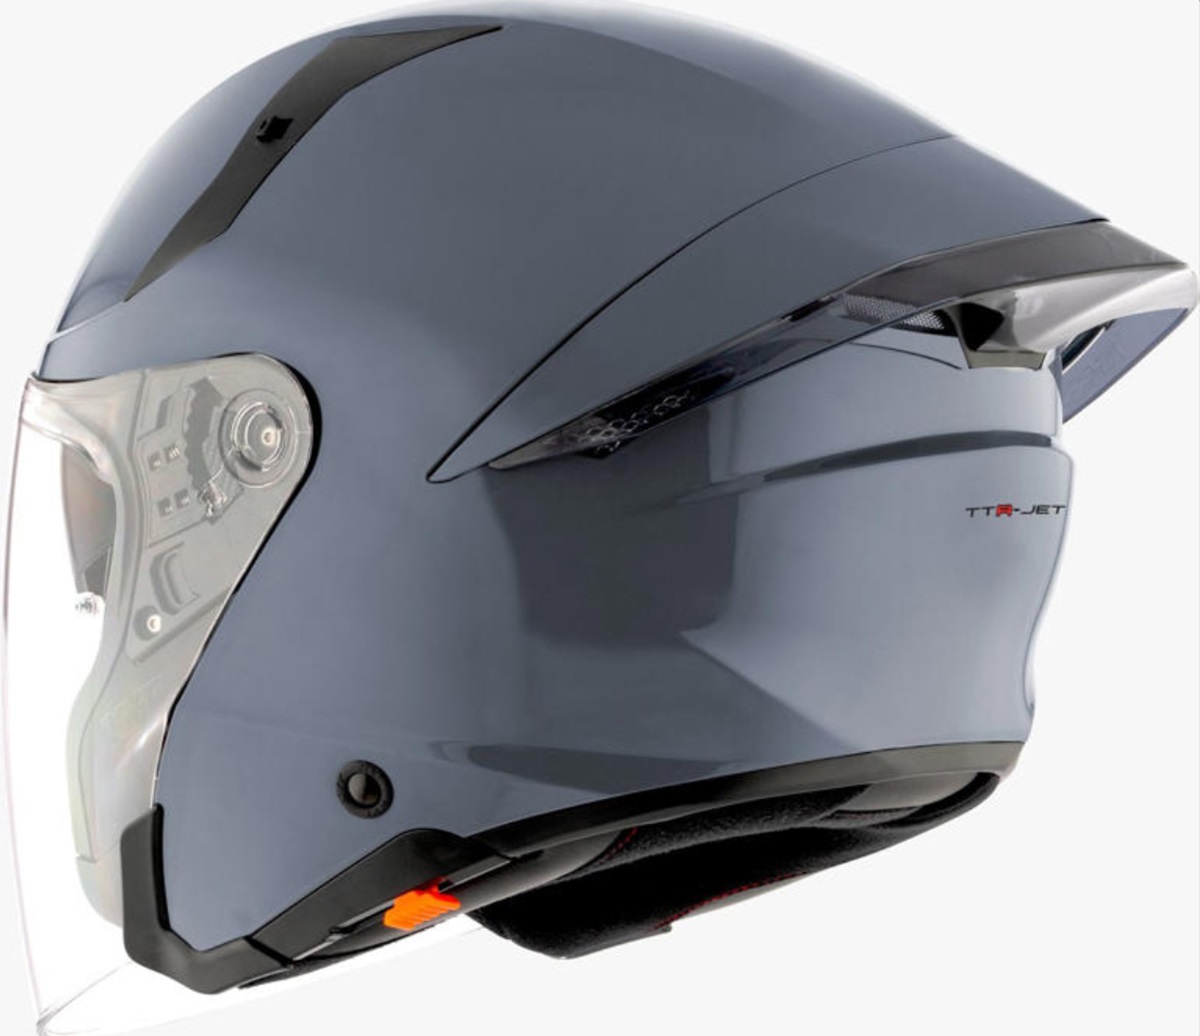 KYT Rilis Helm Baru TT R-JET, Helm Berstandar Eropa Pertama dengan Spoiler!